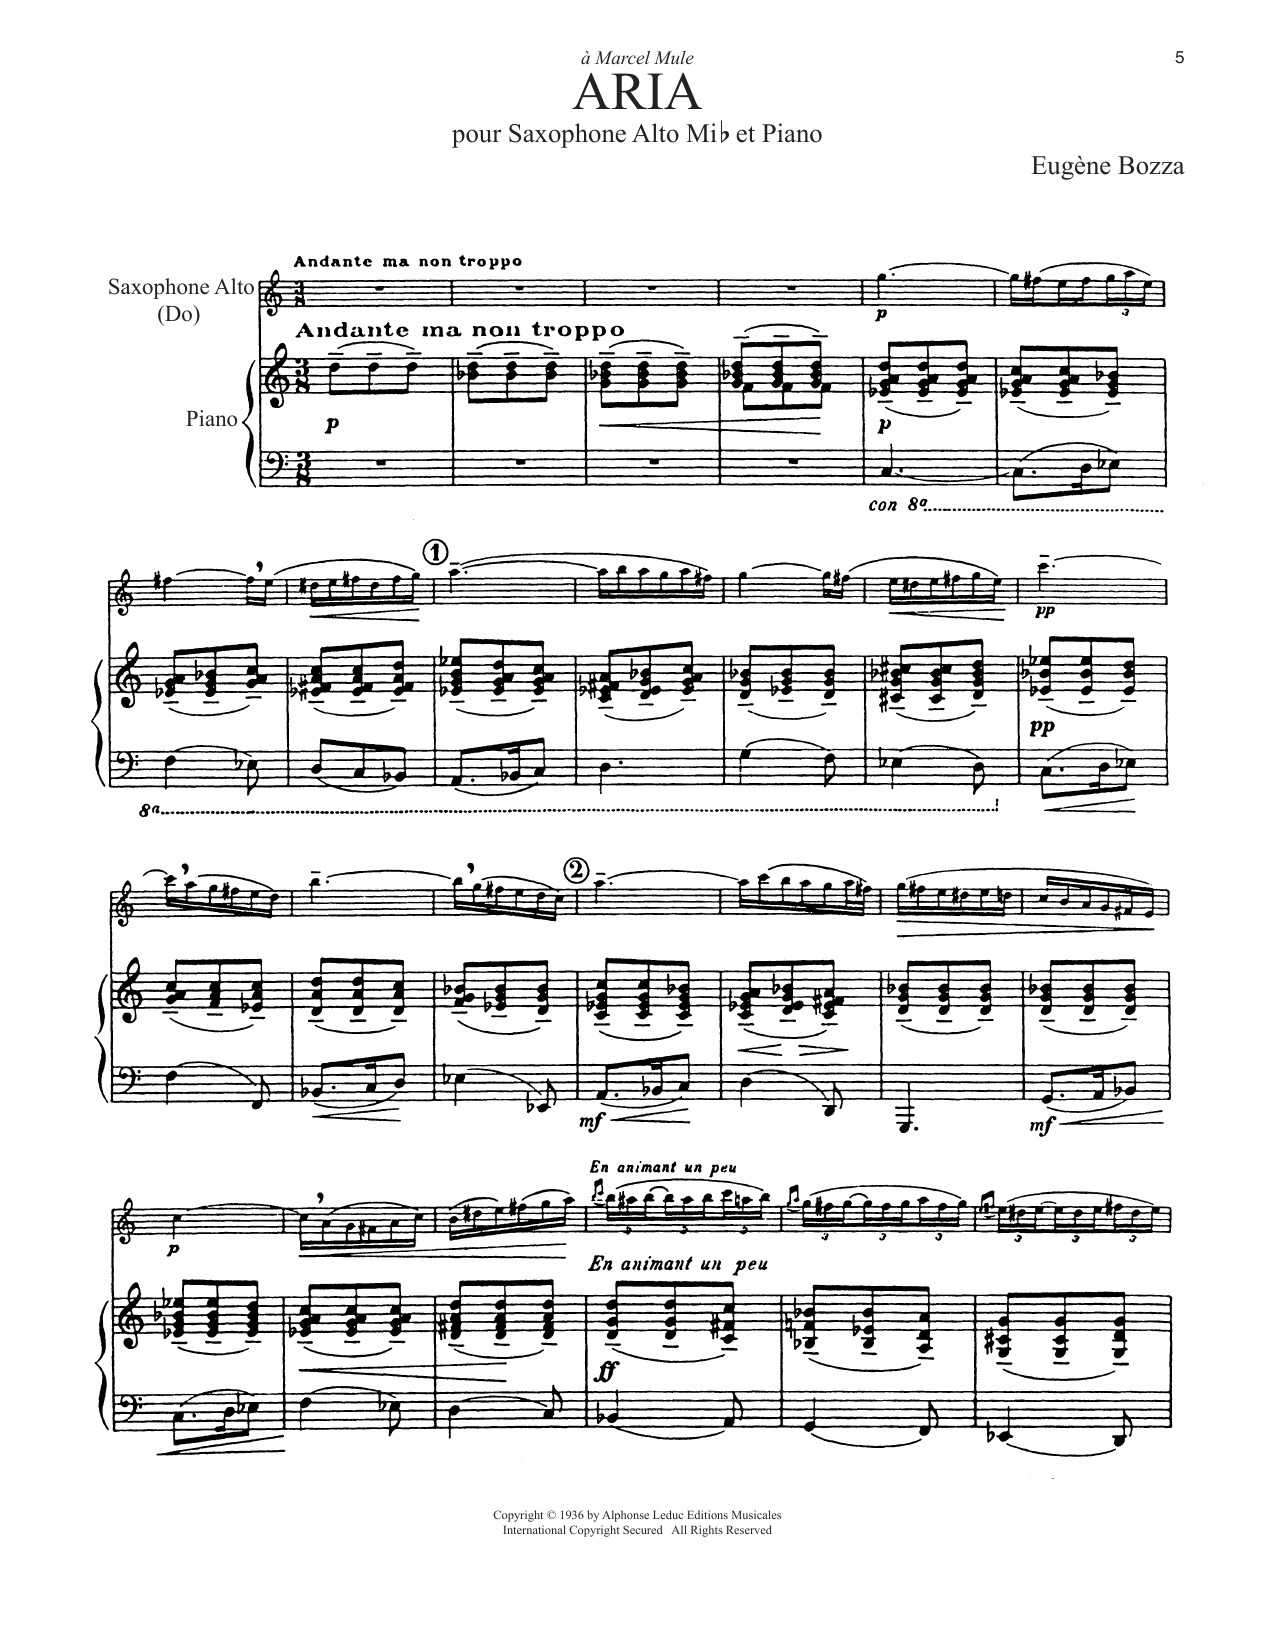 Eugène Bozza Aria sheet music notes and chords arranged for Alto Sax and Piano